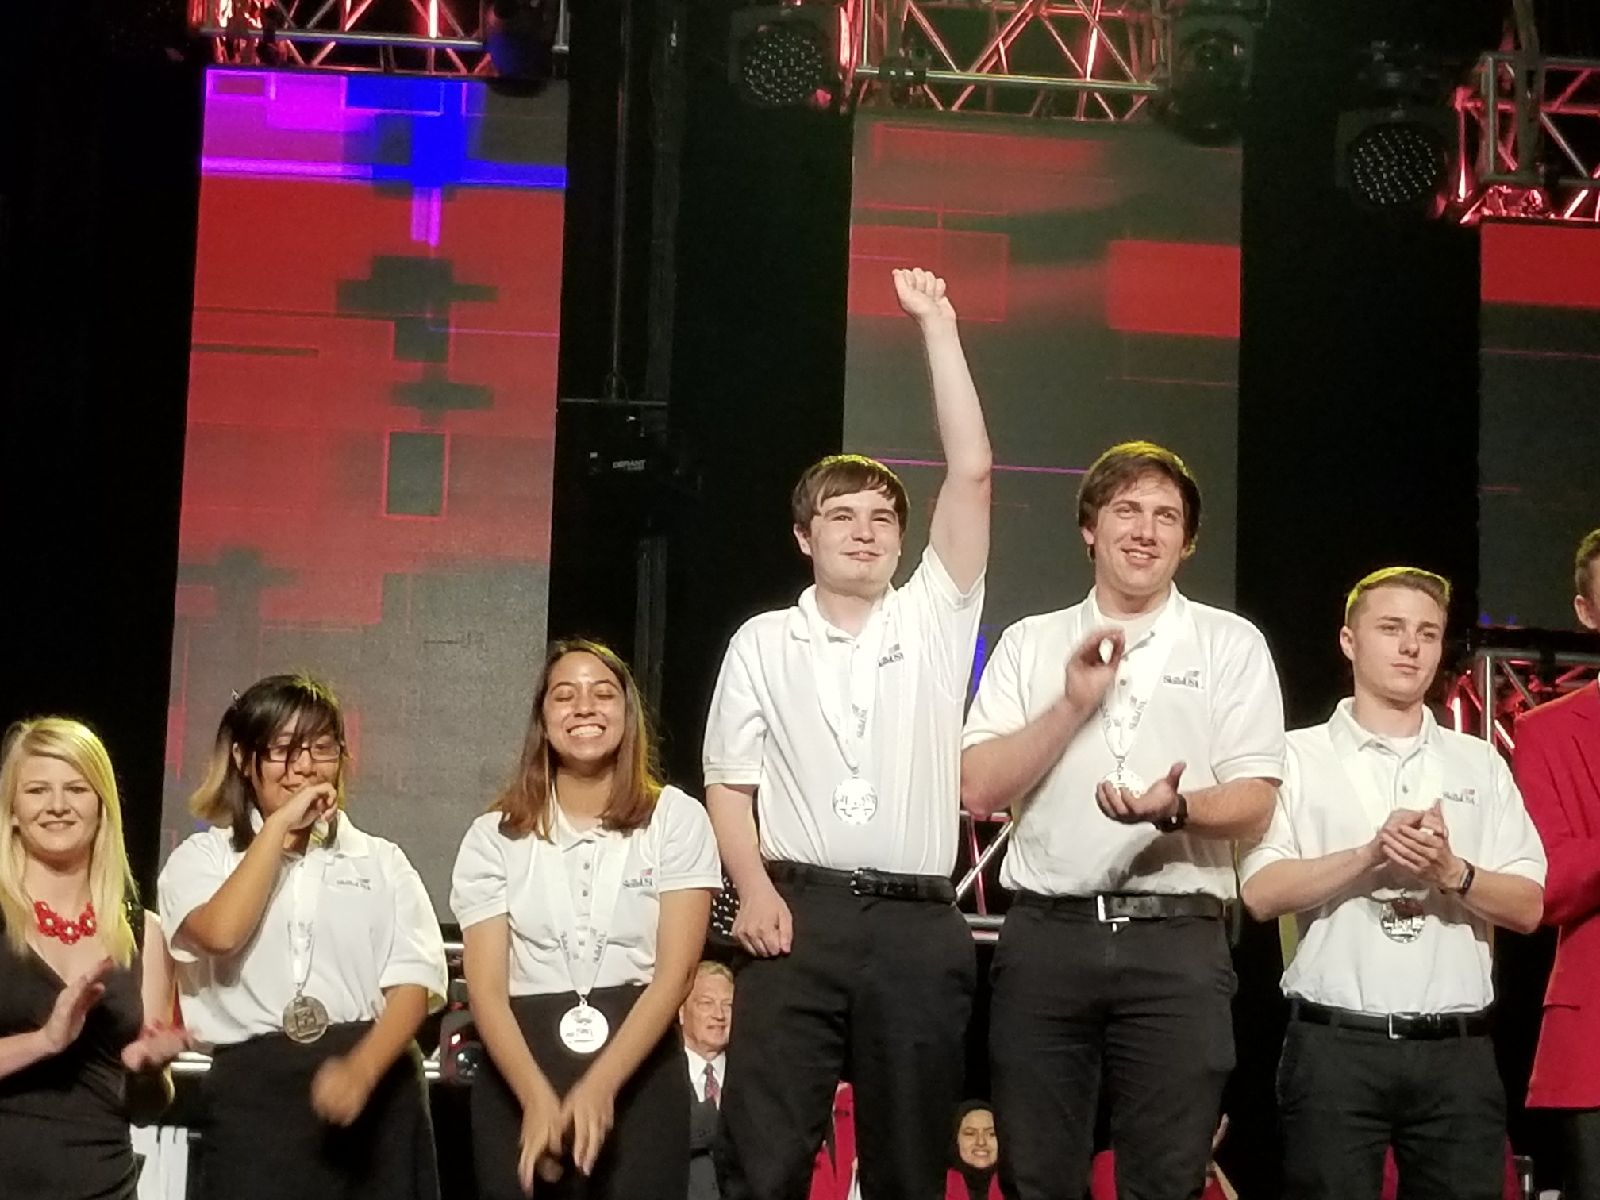 evan on stage - Vinal Tech IST Student Wins SkillsUSA Nationals